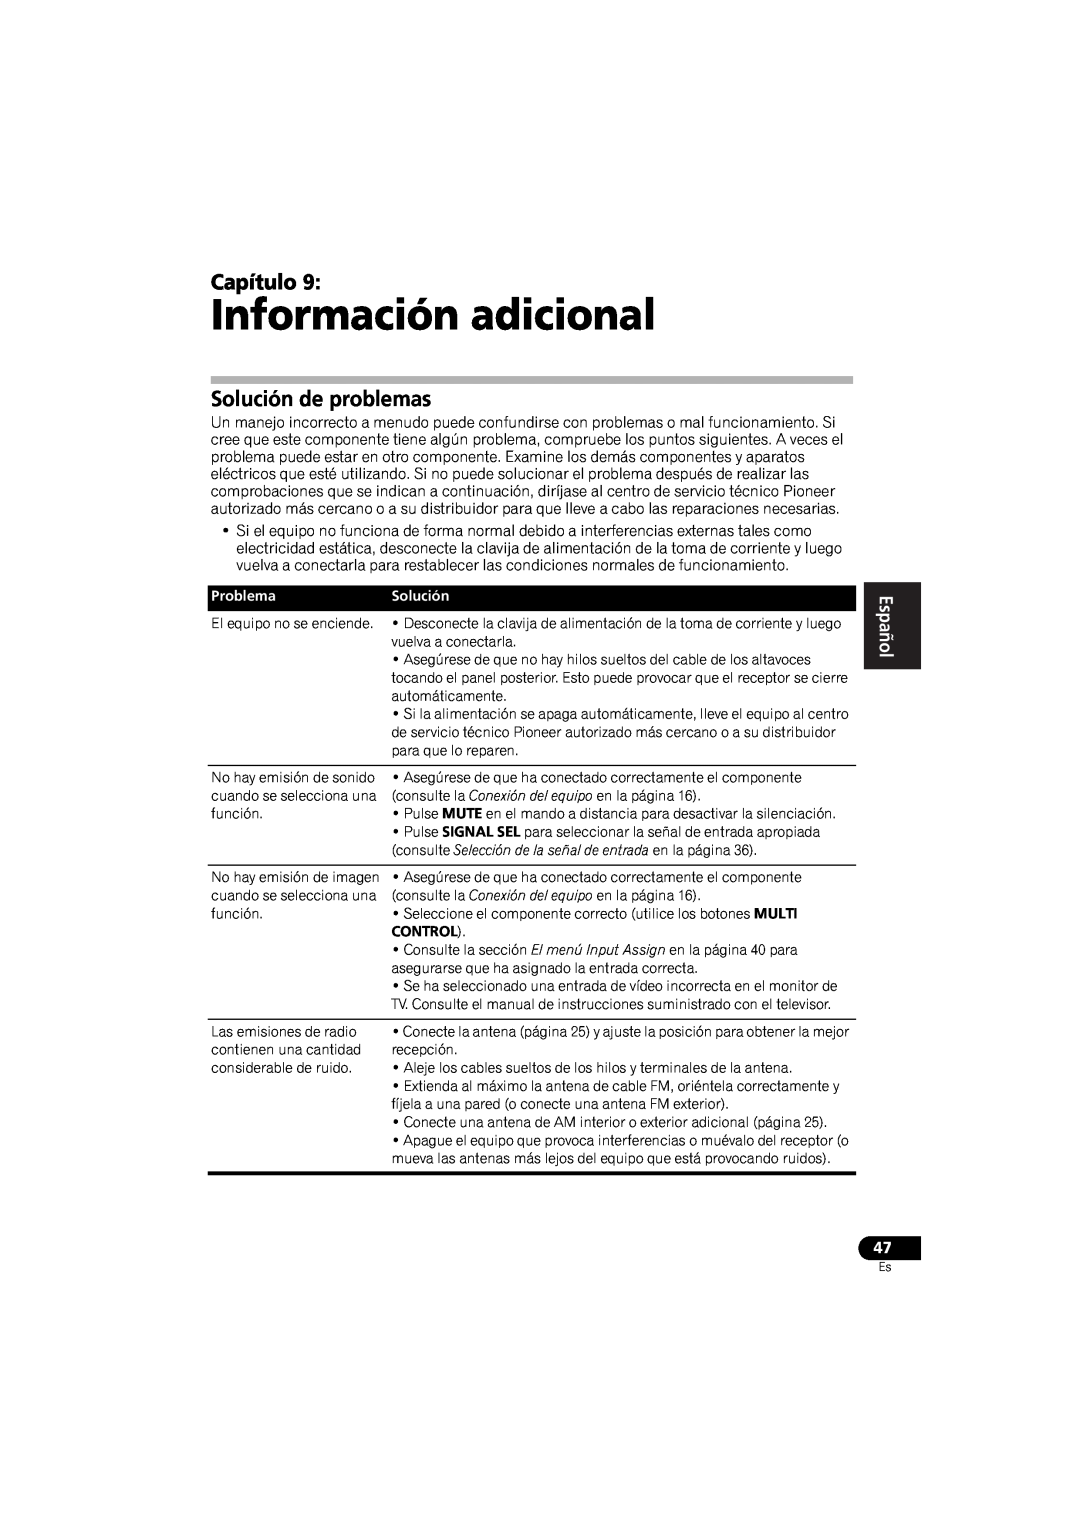 Pioneer VSX-520 manual Información adicional, Capítulo, Solución de problemas, English, Français, Español, Problema 